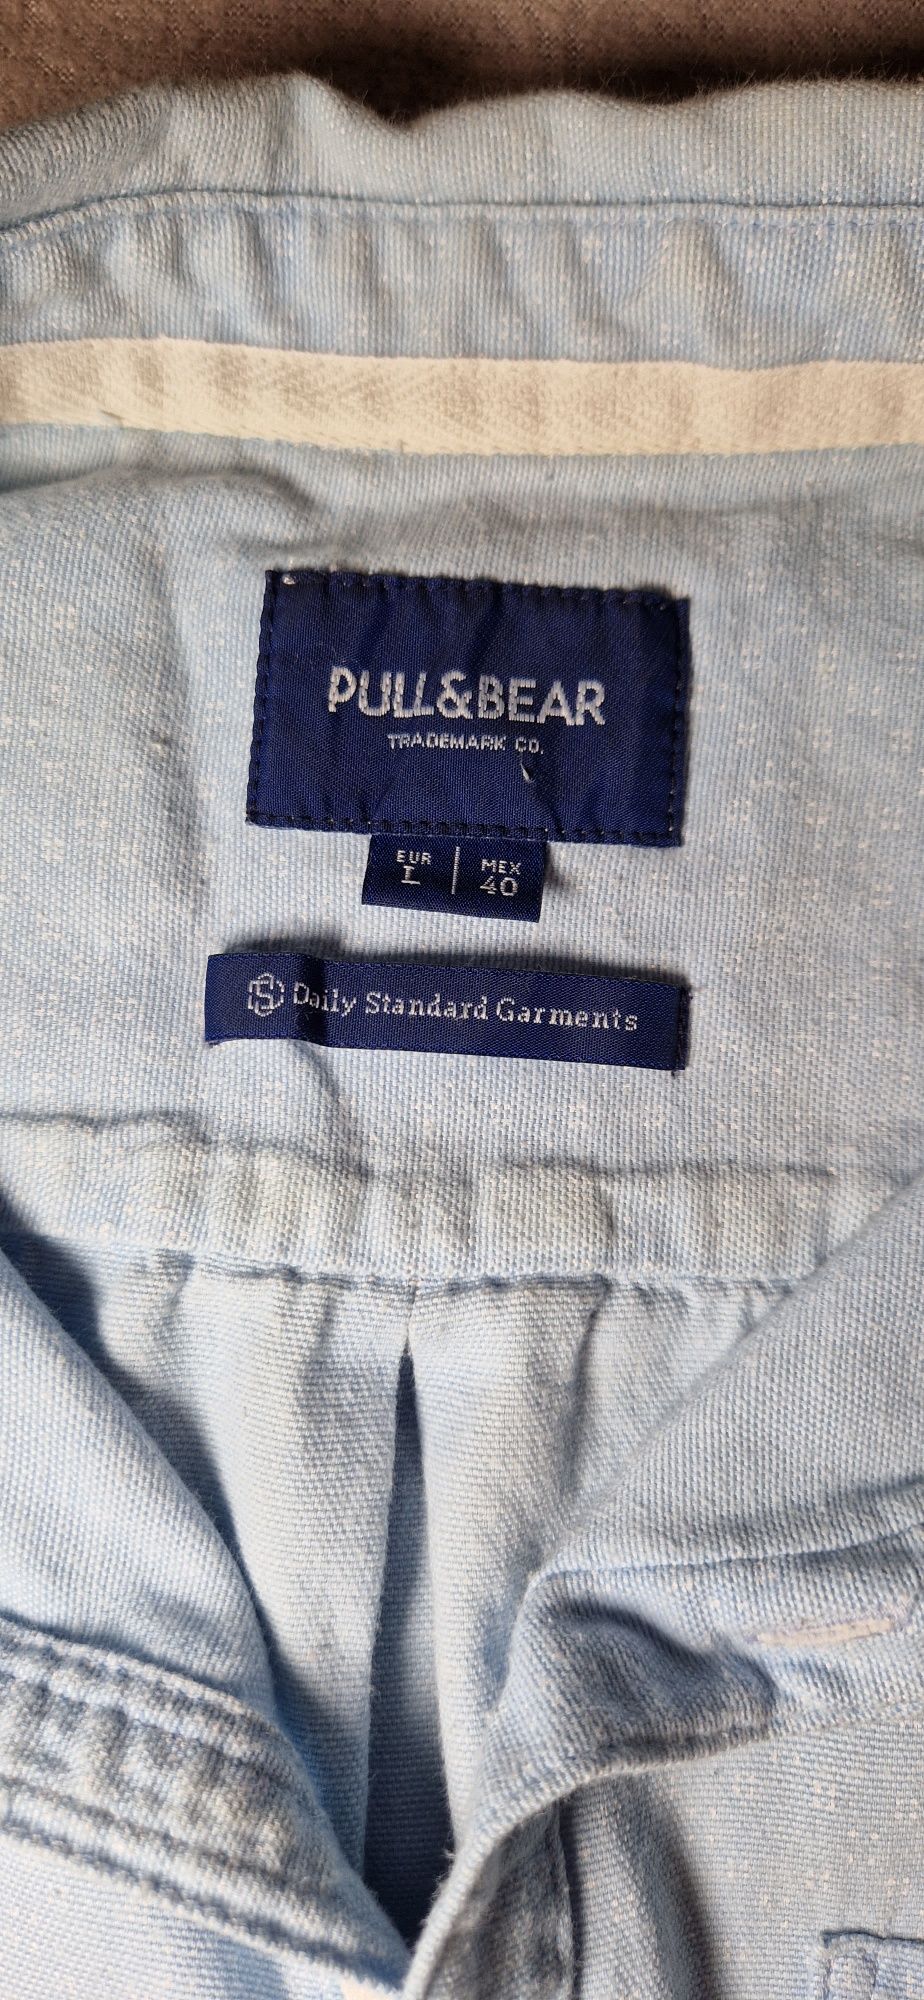 Koszula męska r.L pull&bear elegancka błękitna z kołnierzykiem